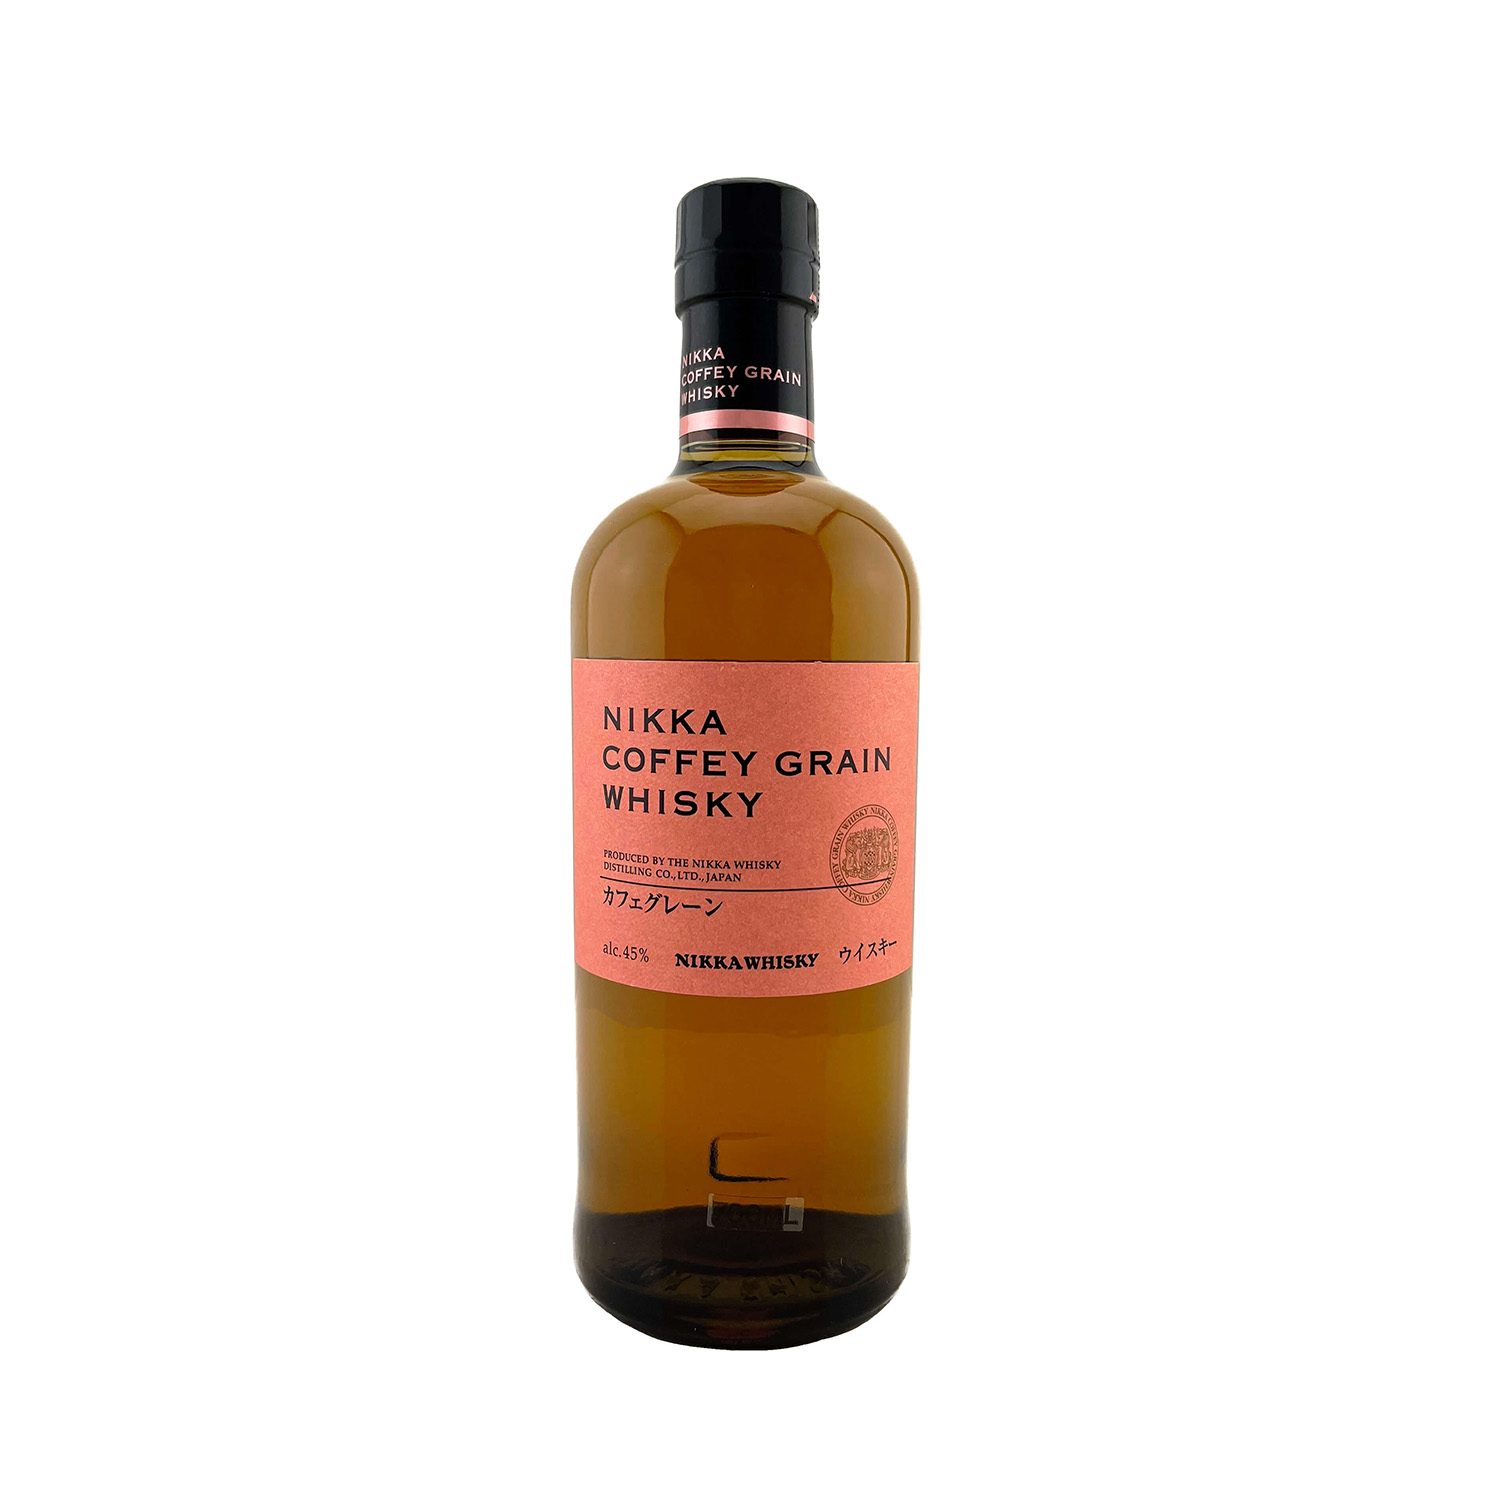 Nikka Coffey Grain Whisky, Japanese Whisky, The Old Barrelhouse